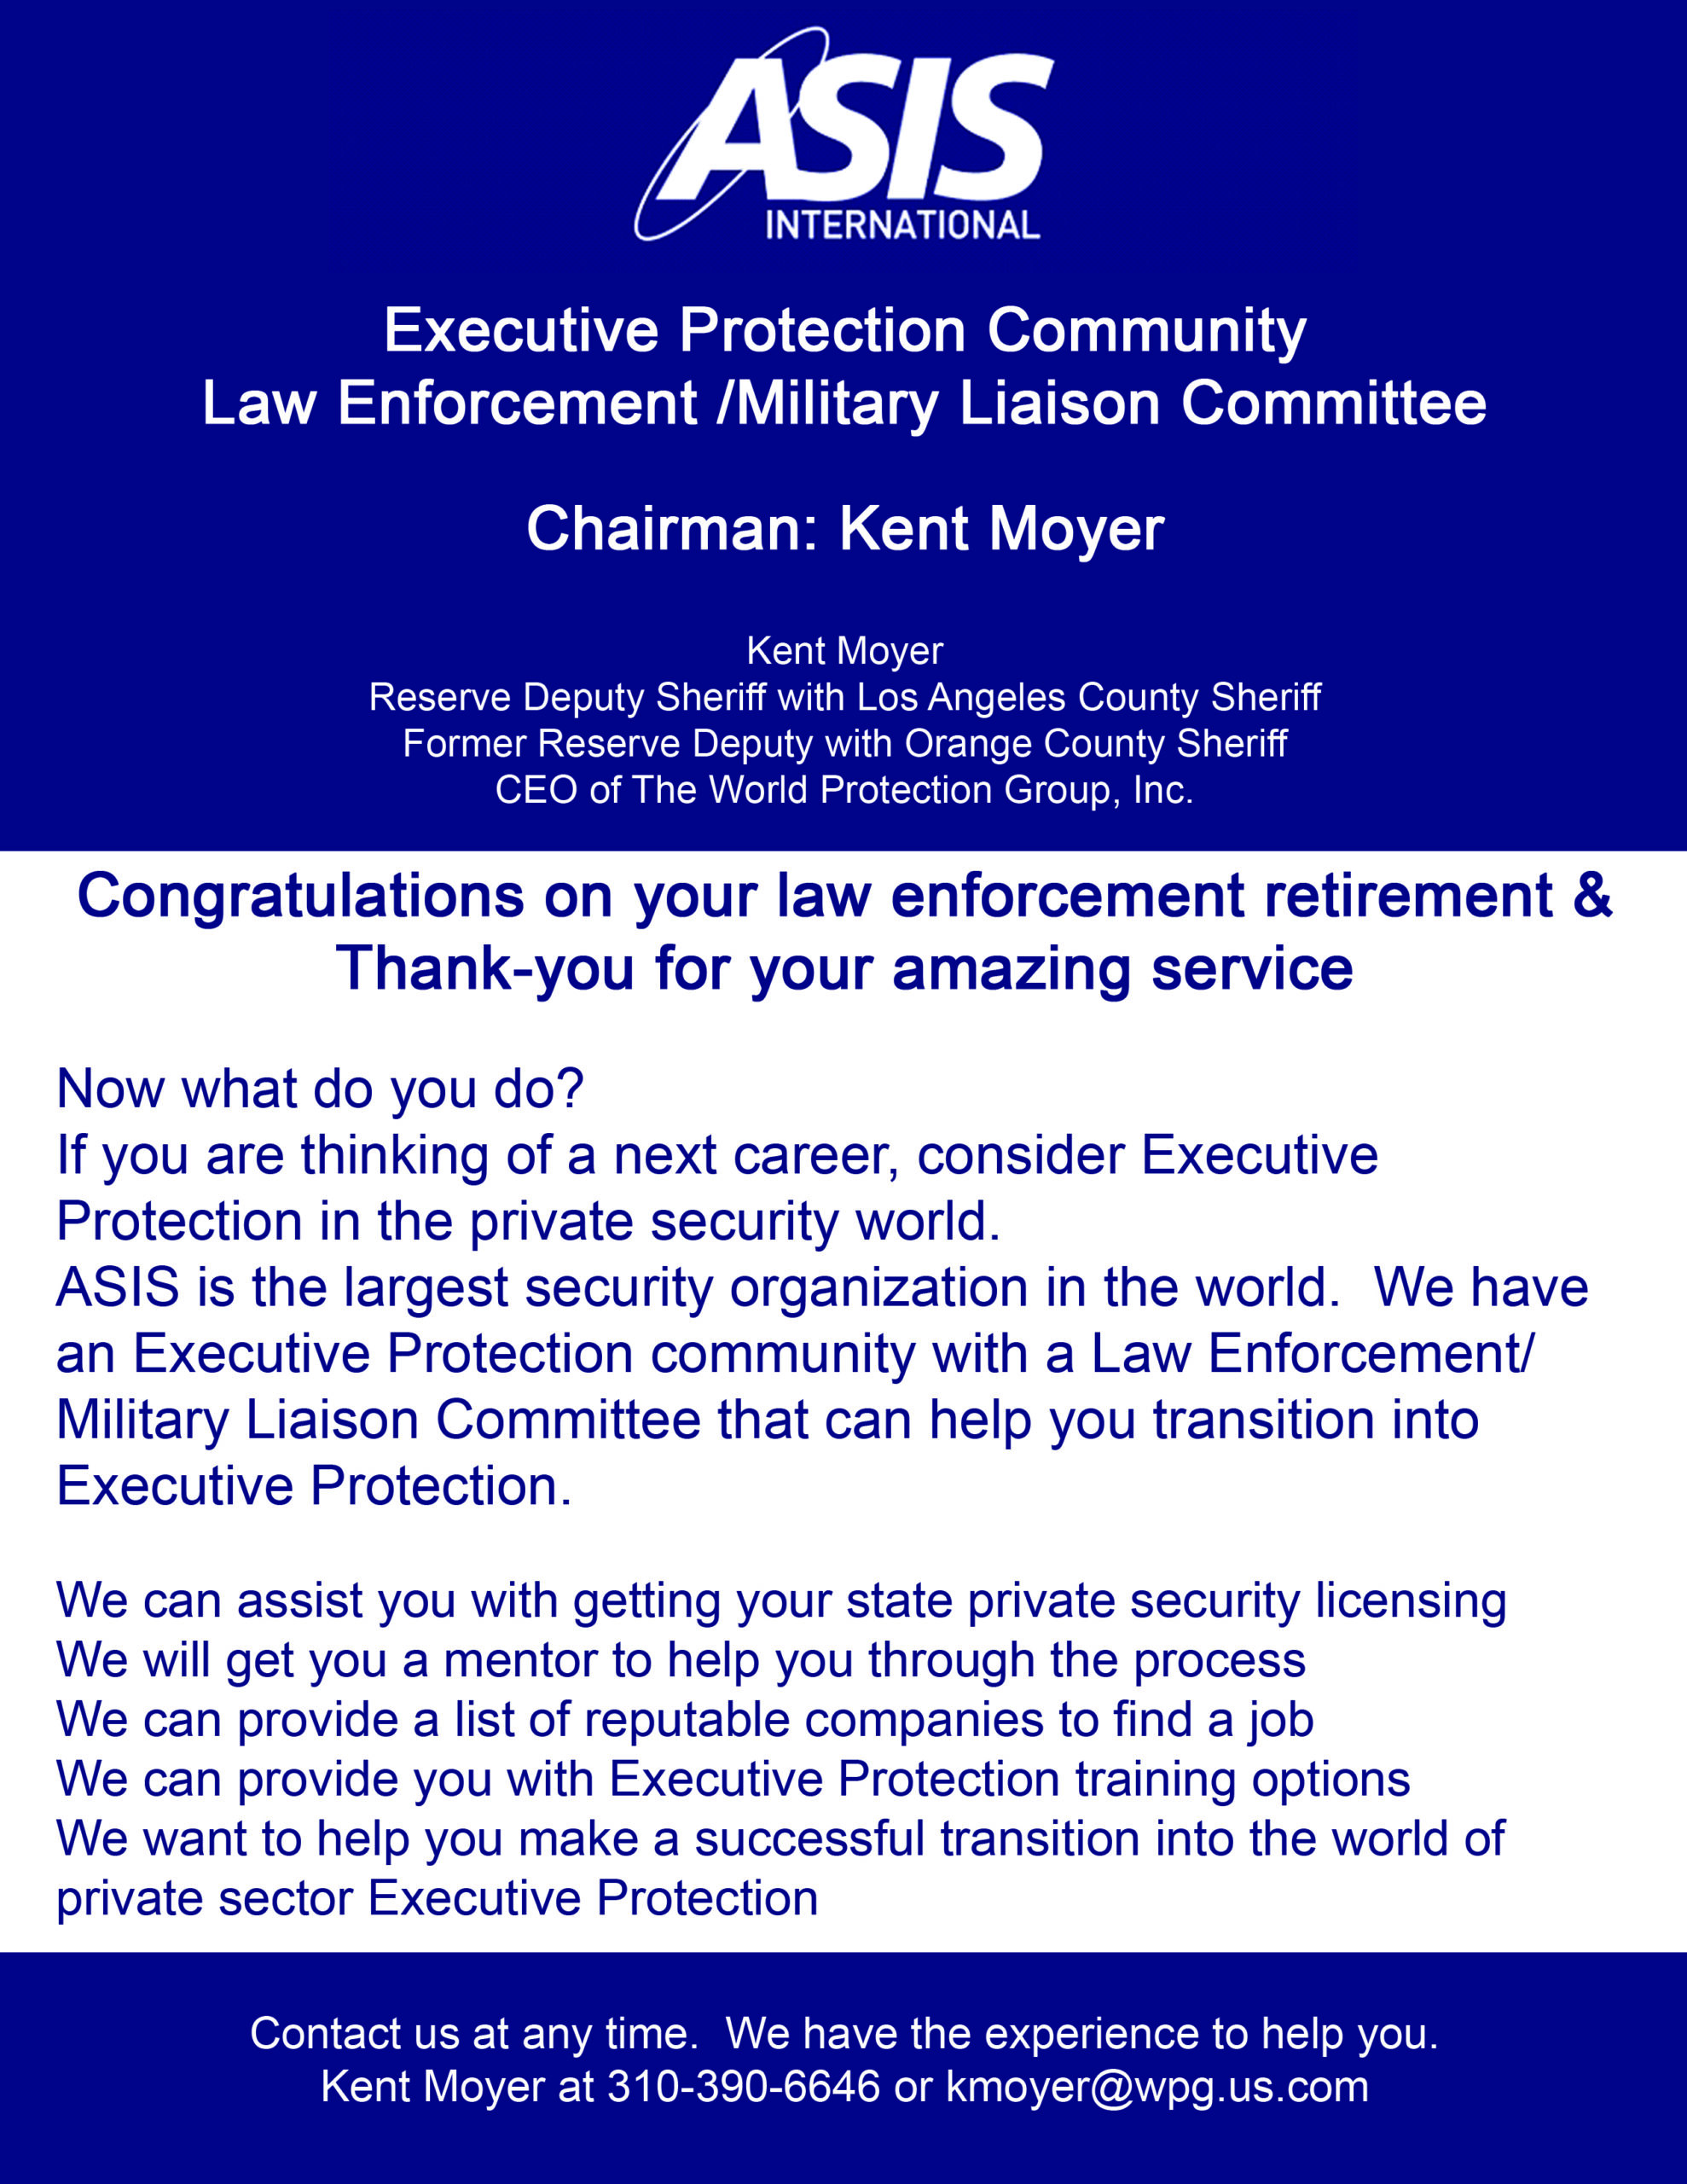 ASIS Executive Protection flyer